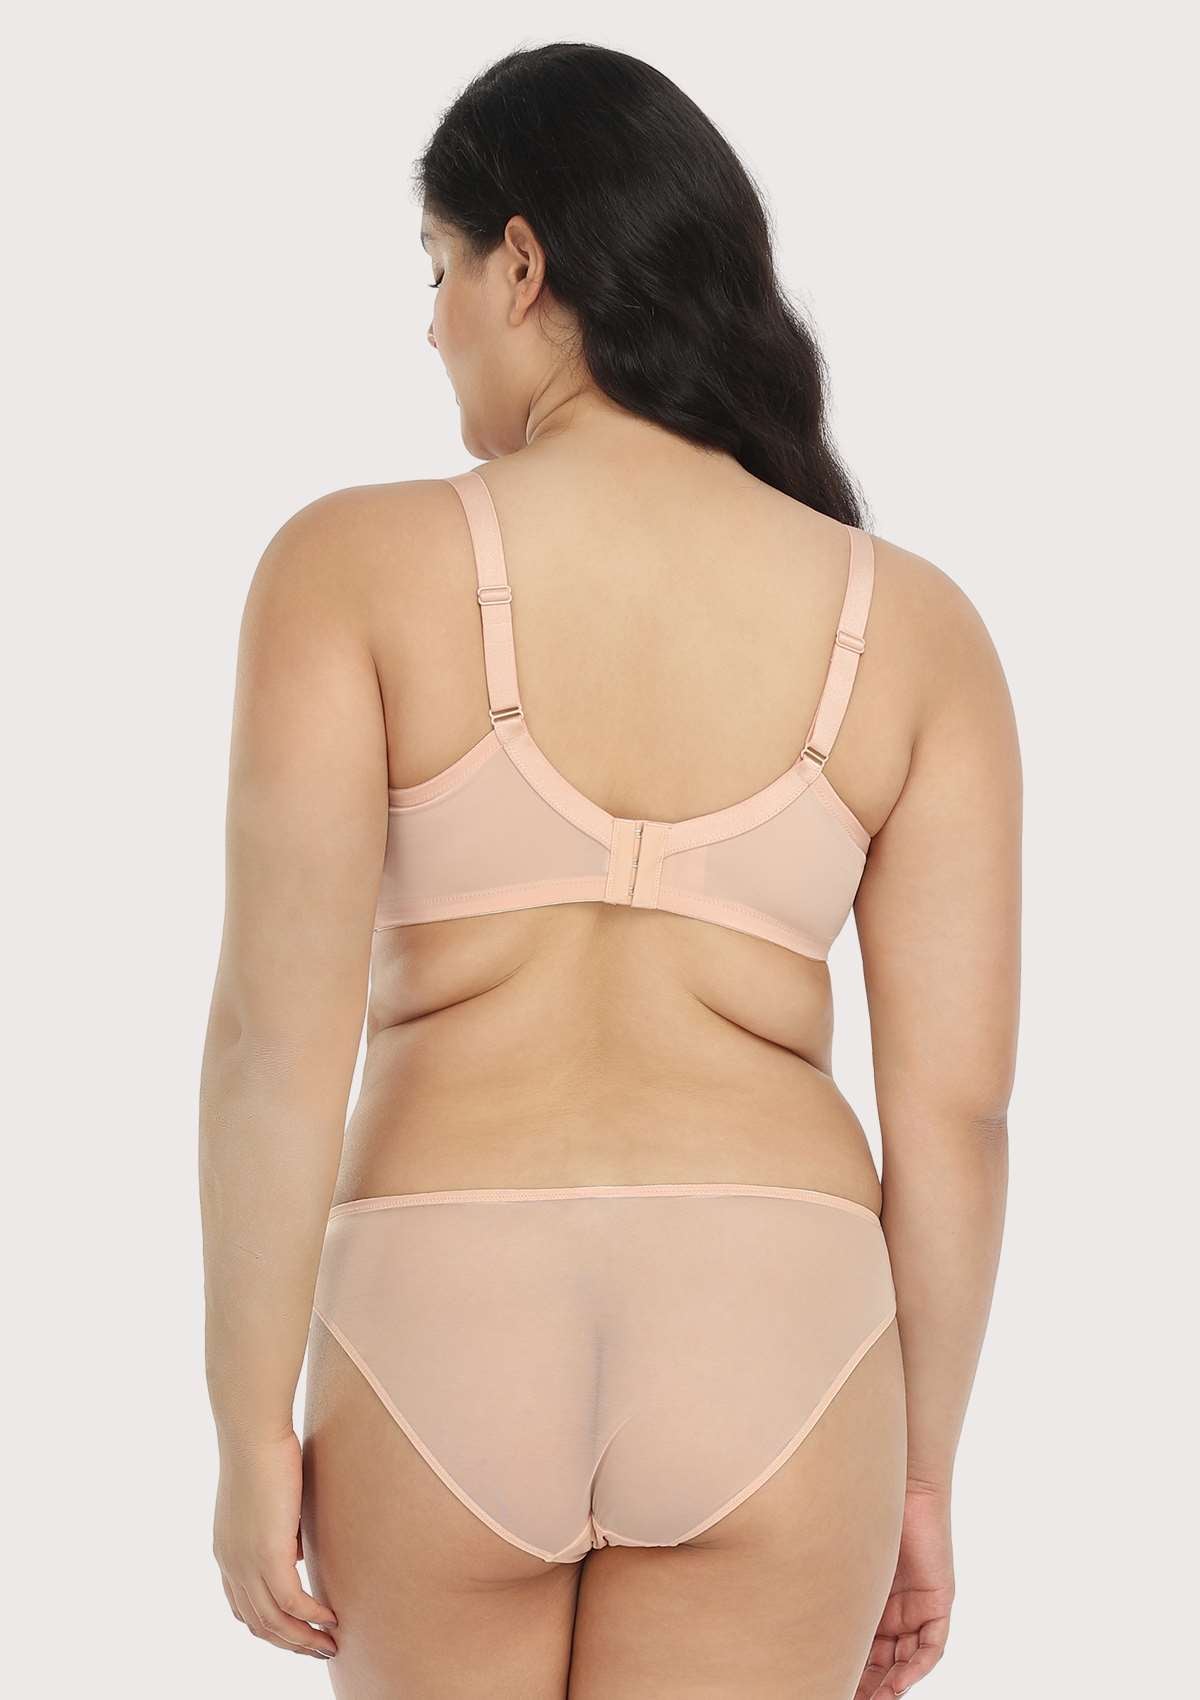 HSIA Sunflower Matching Bra And Panties Set: Comfortable Plus Size Bra - Pink / 38 / C